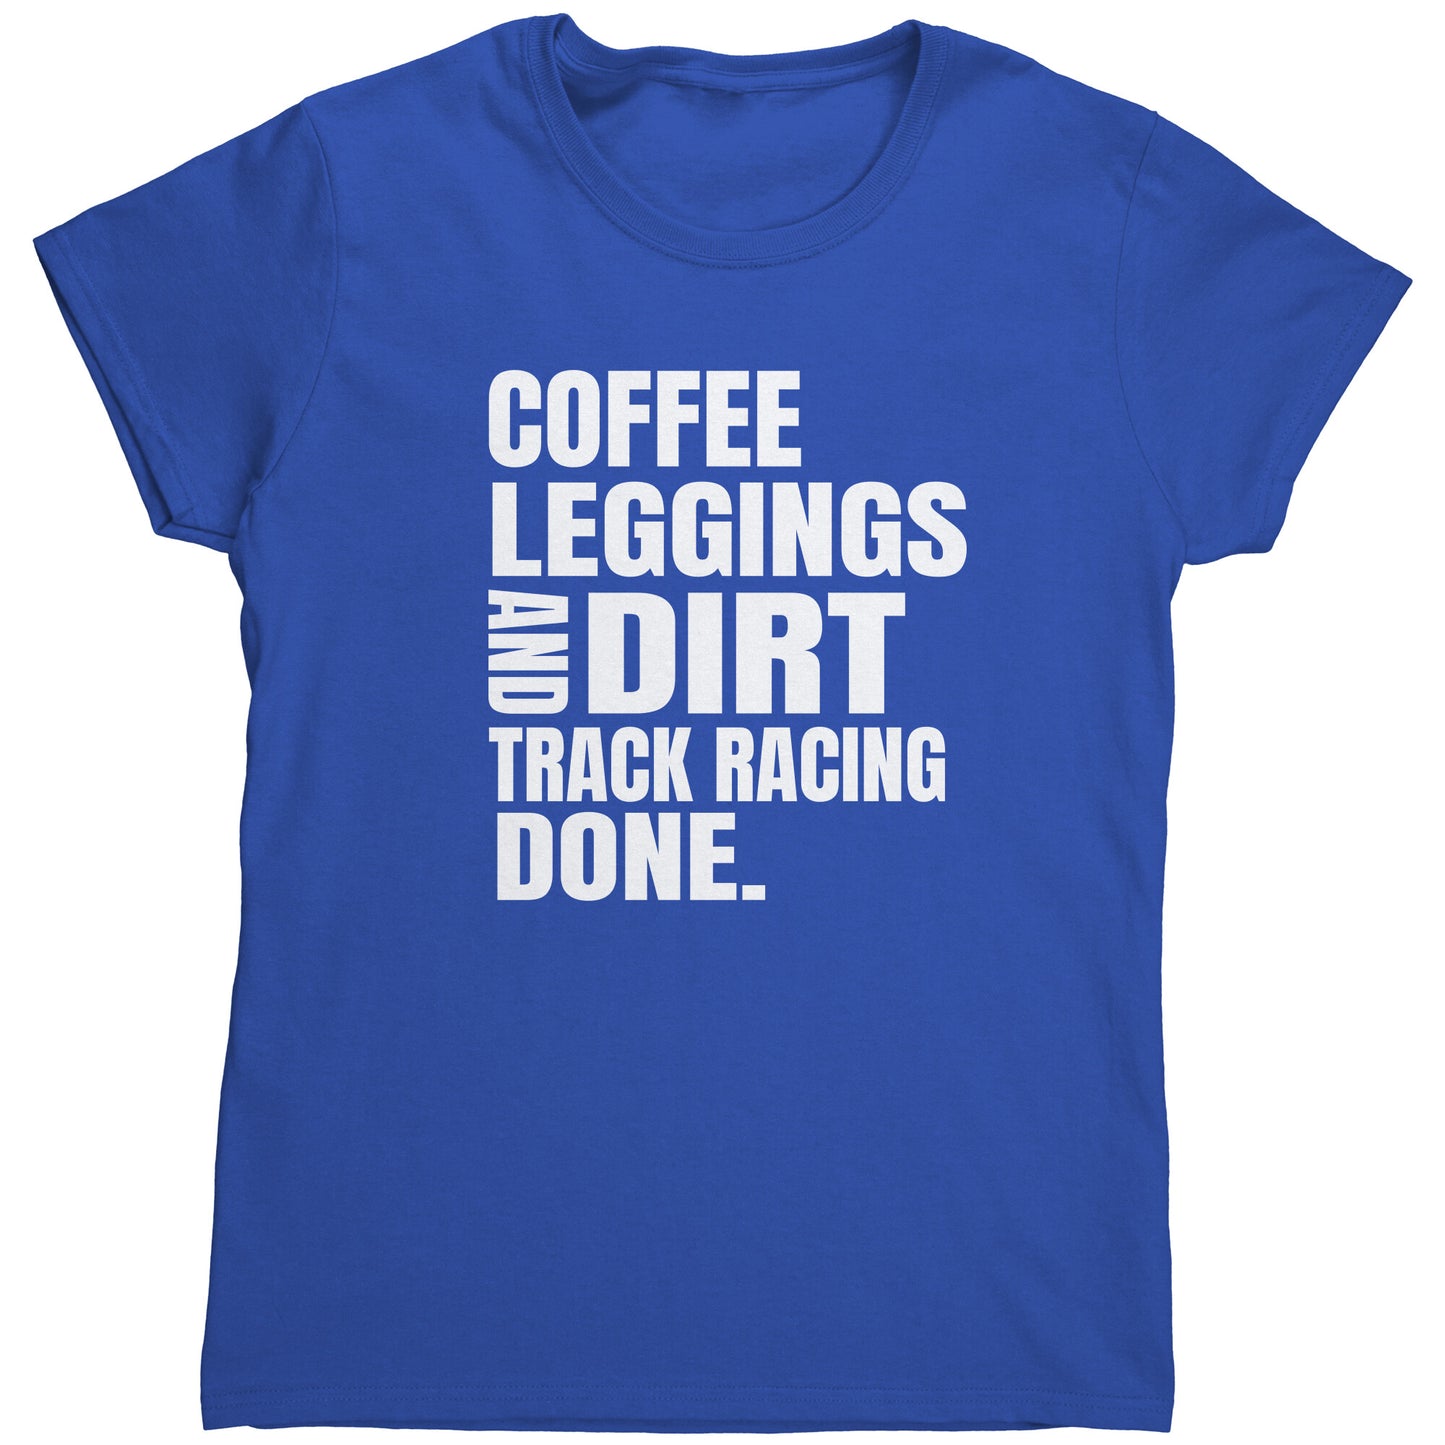 Coffee Leggings And Dirt Track Racing Women's T-Shirt